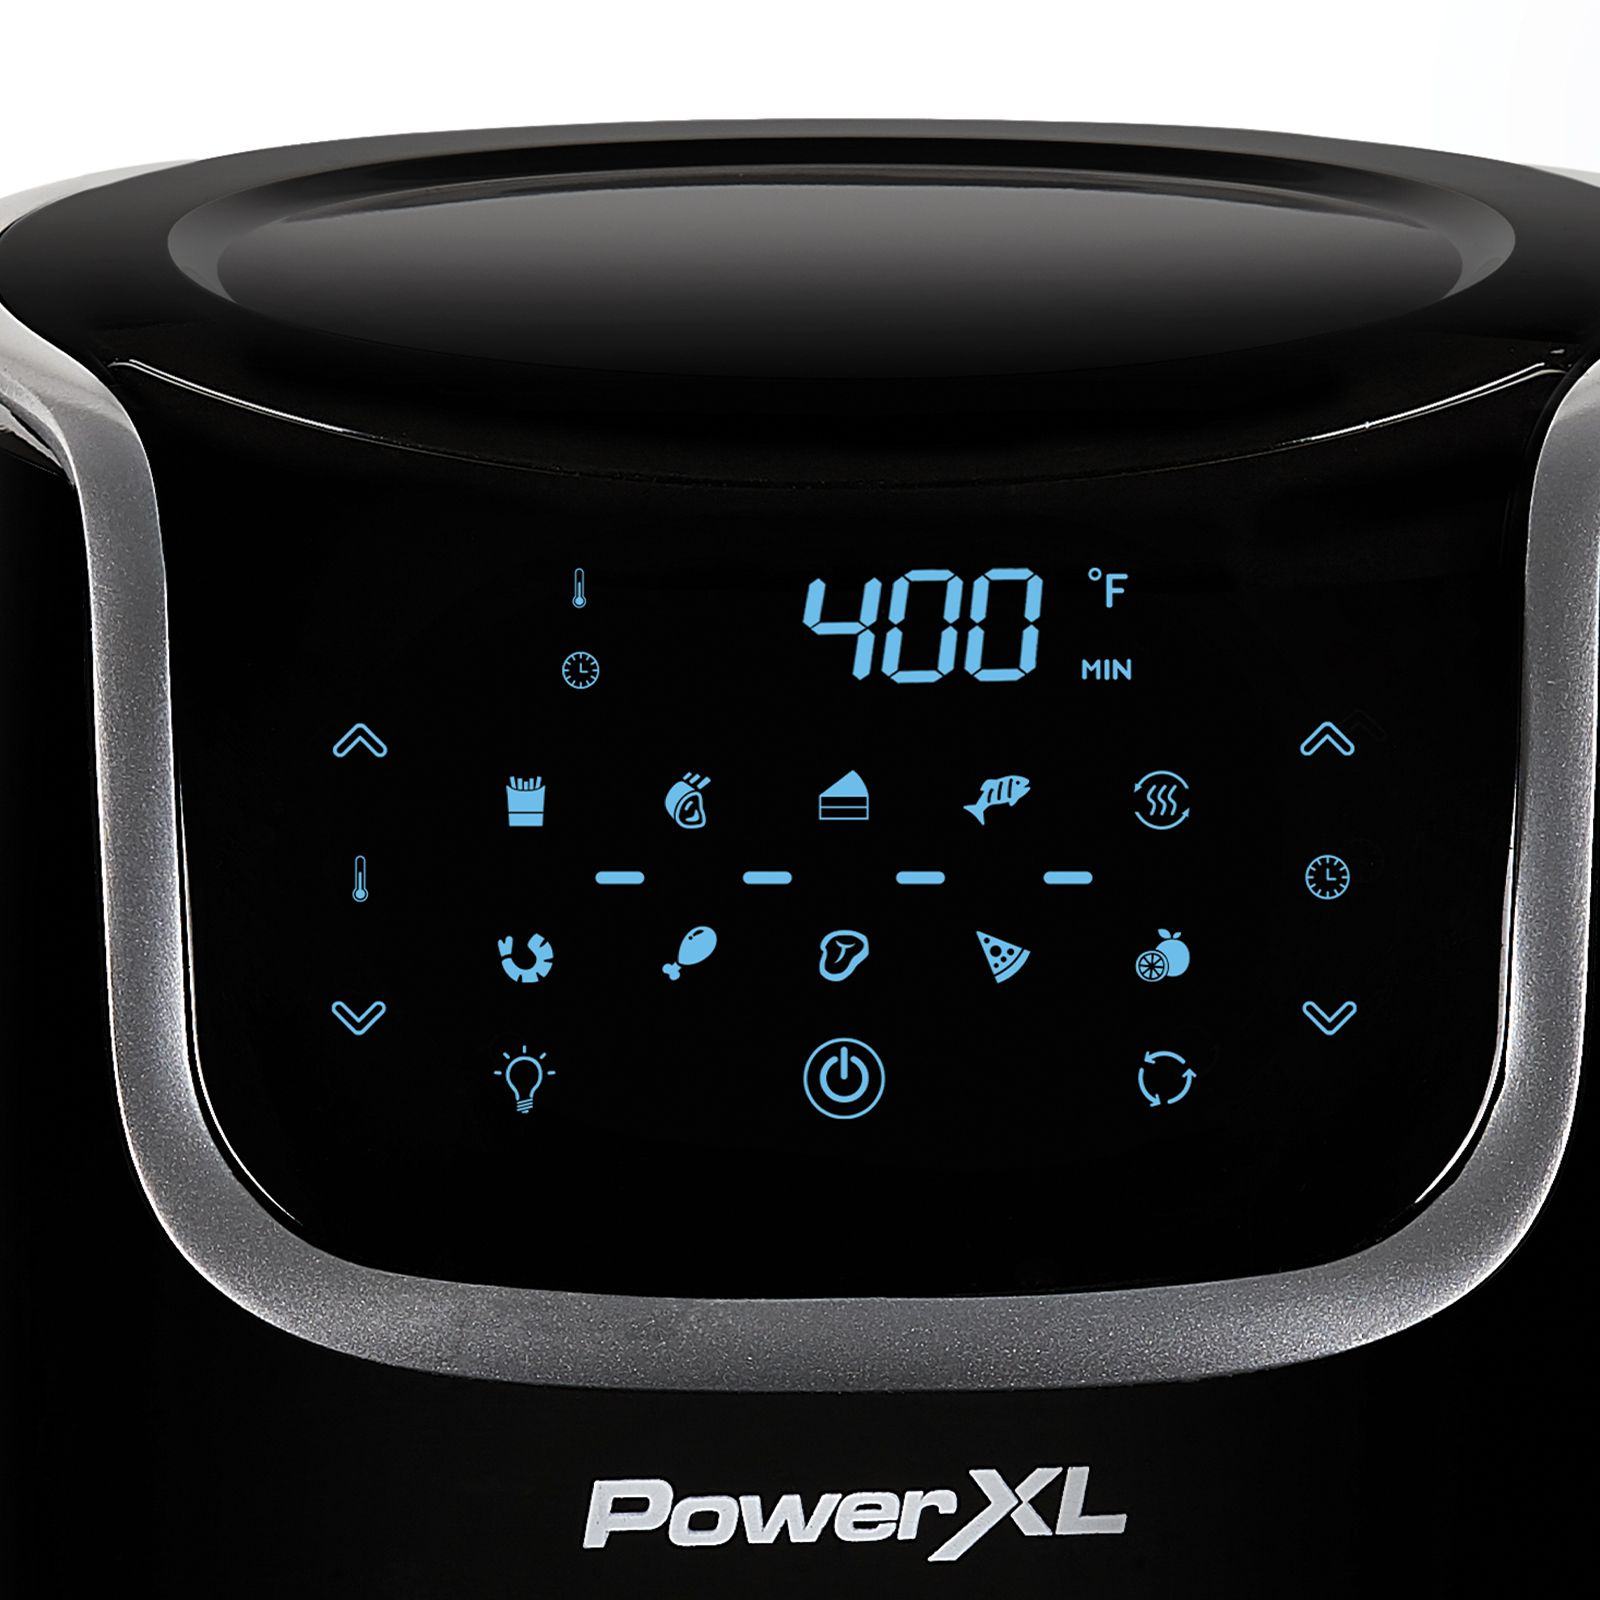 PowerXL Turbo Air Fryer XL 10QT Glass Bowl & Accessories CL-002